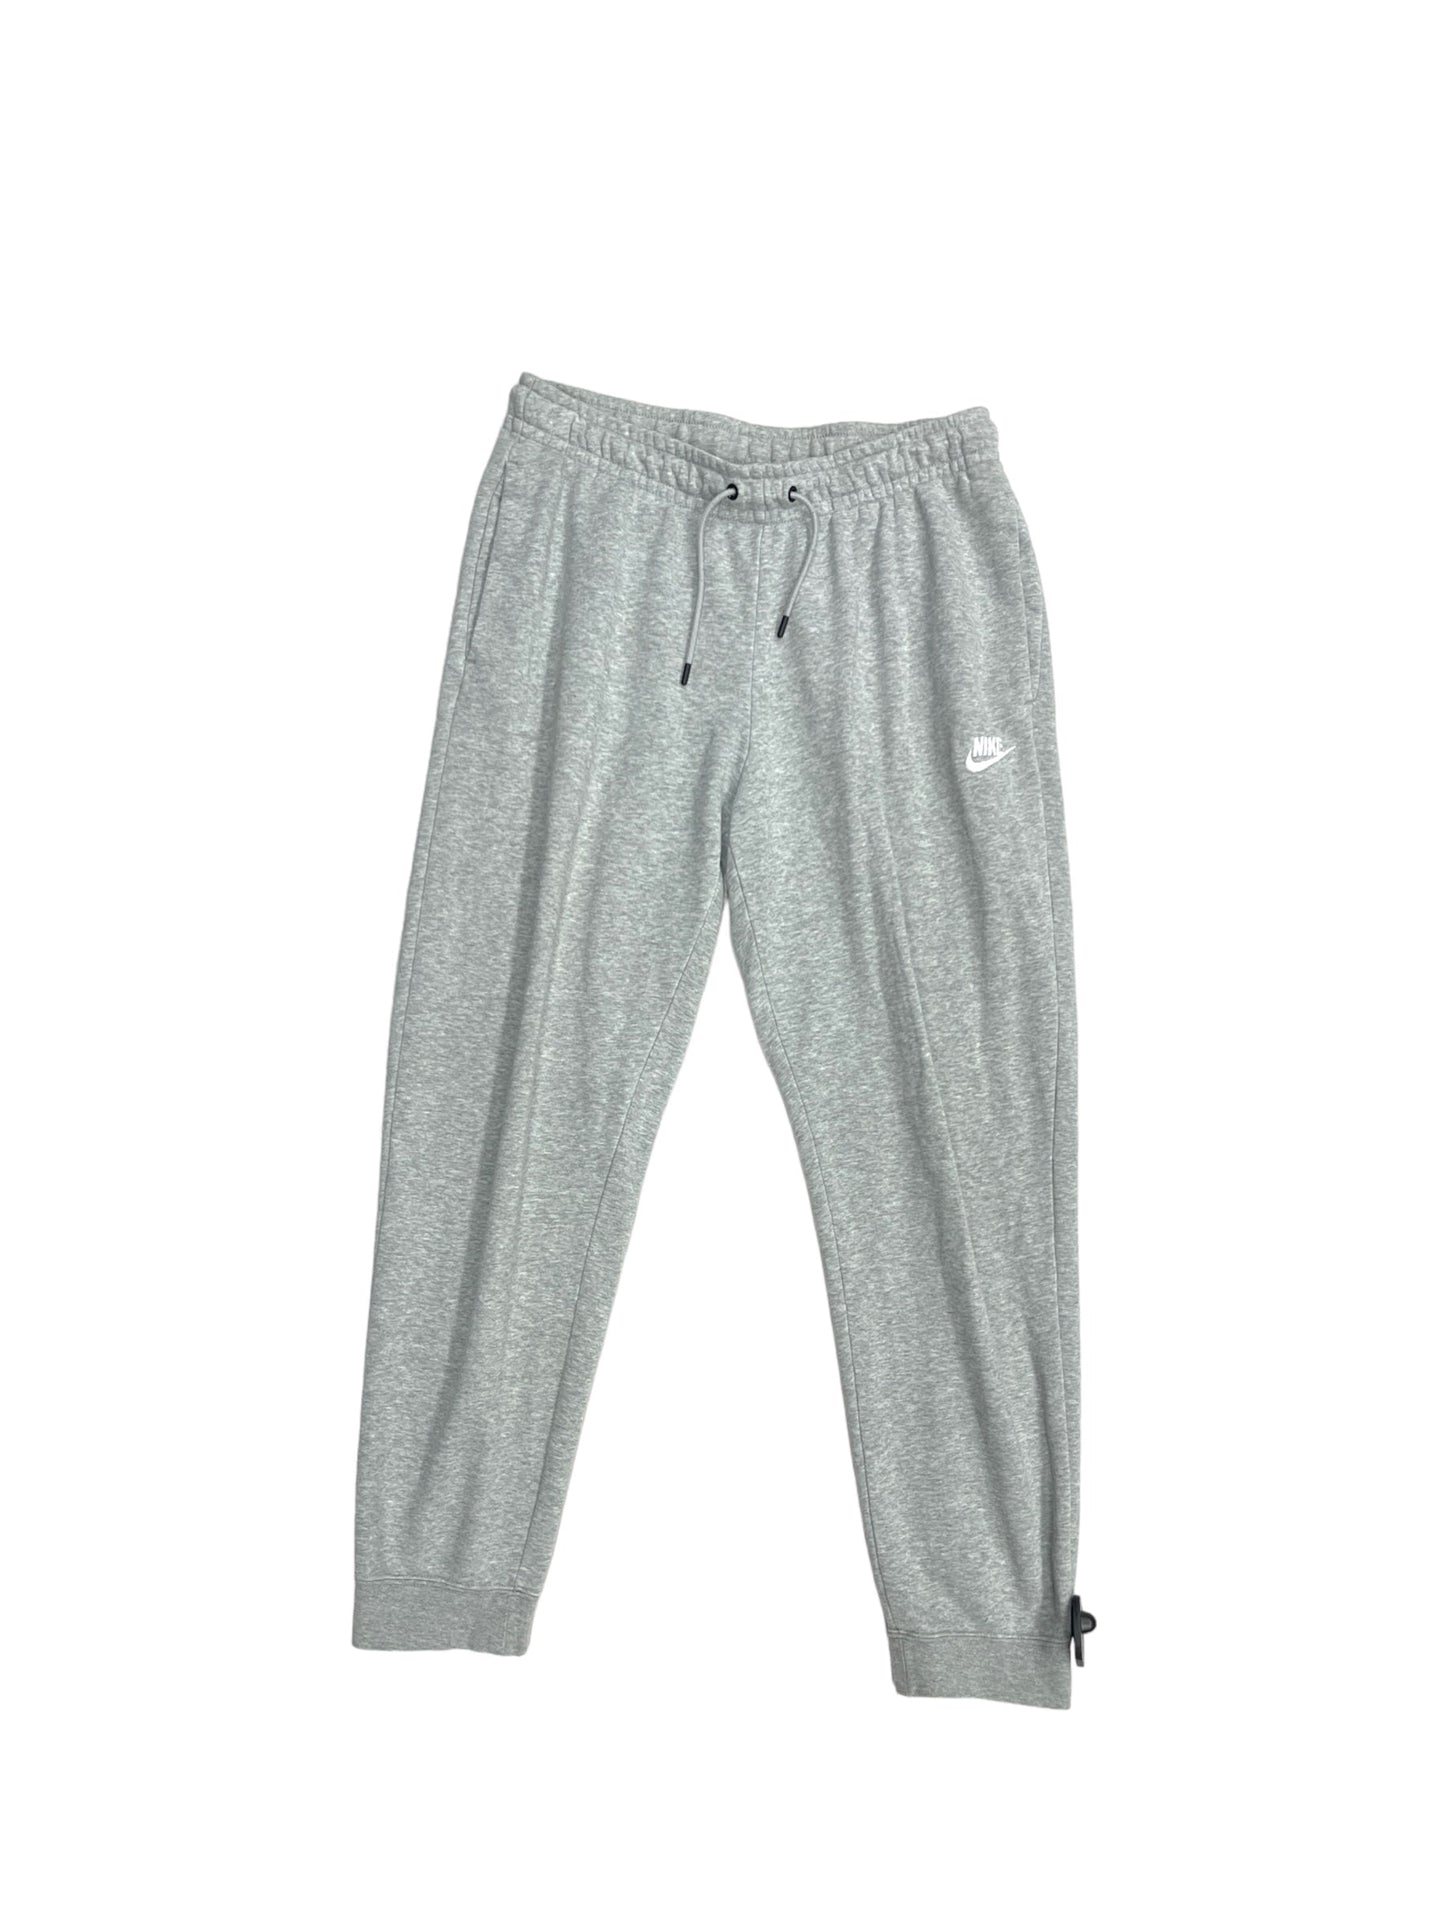 Grey Athletic Pants Nike Apparel, Size M